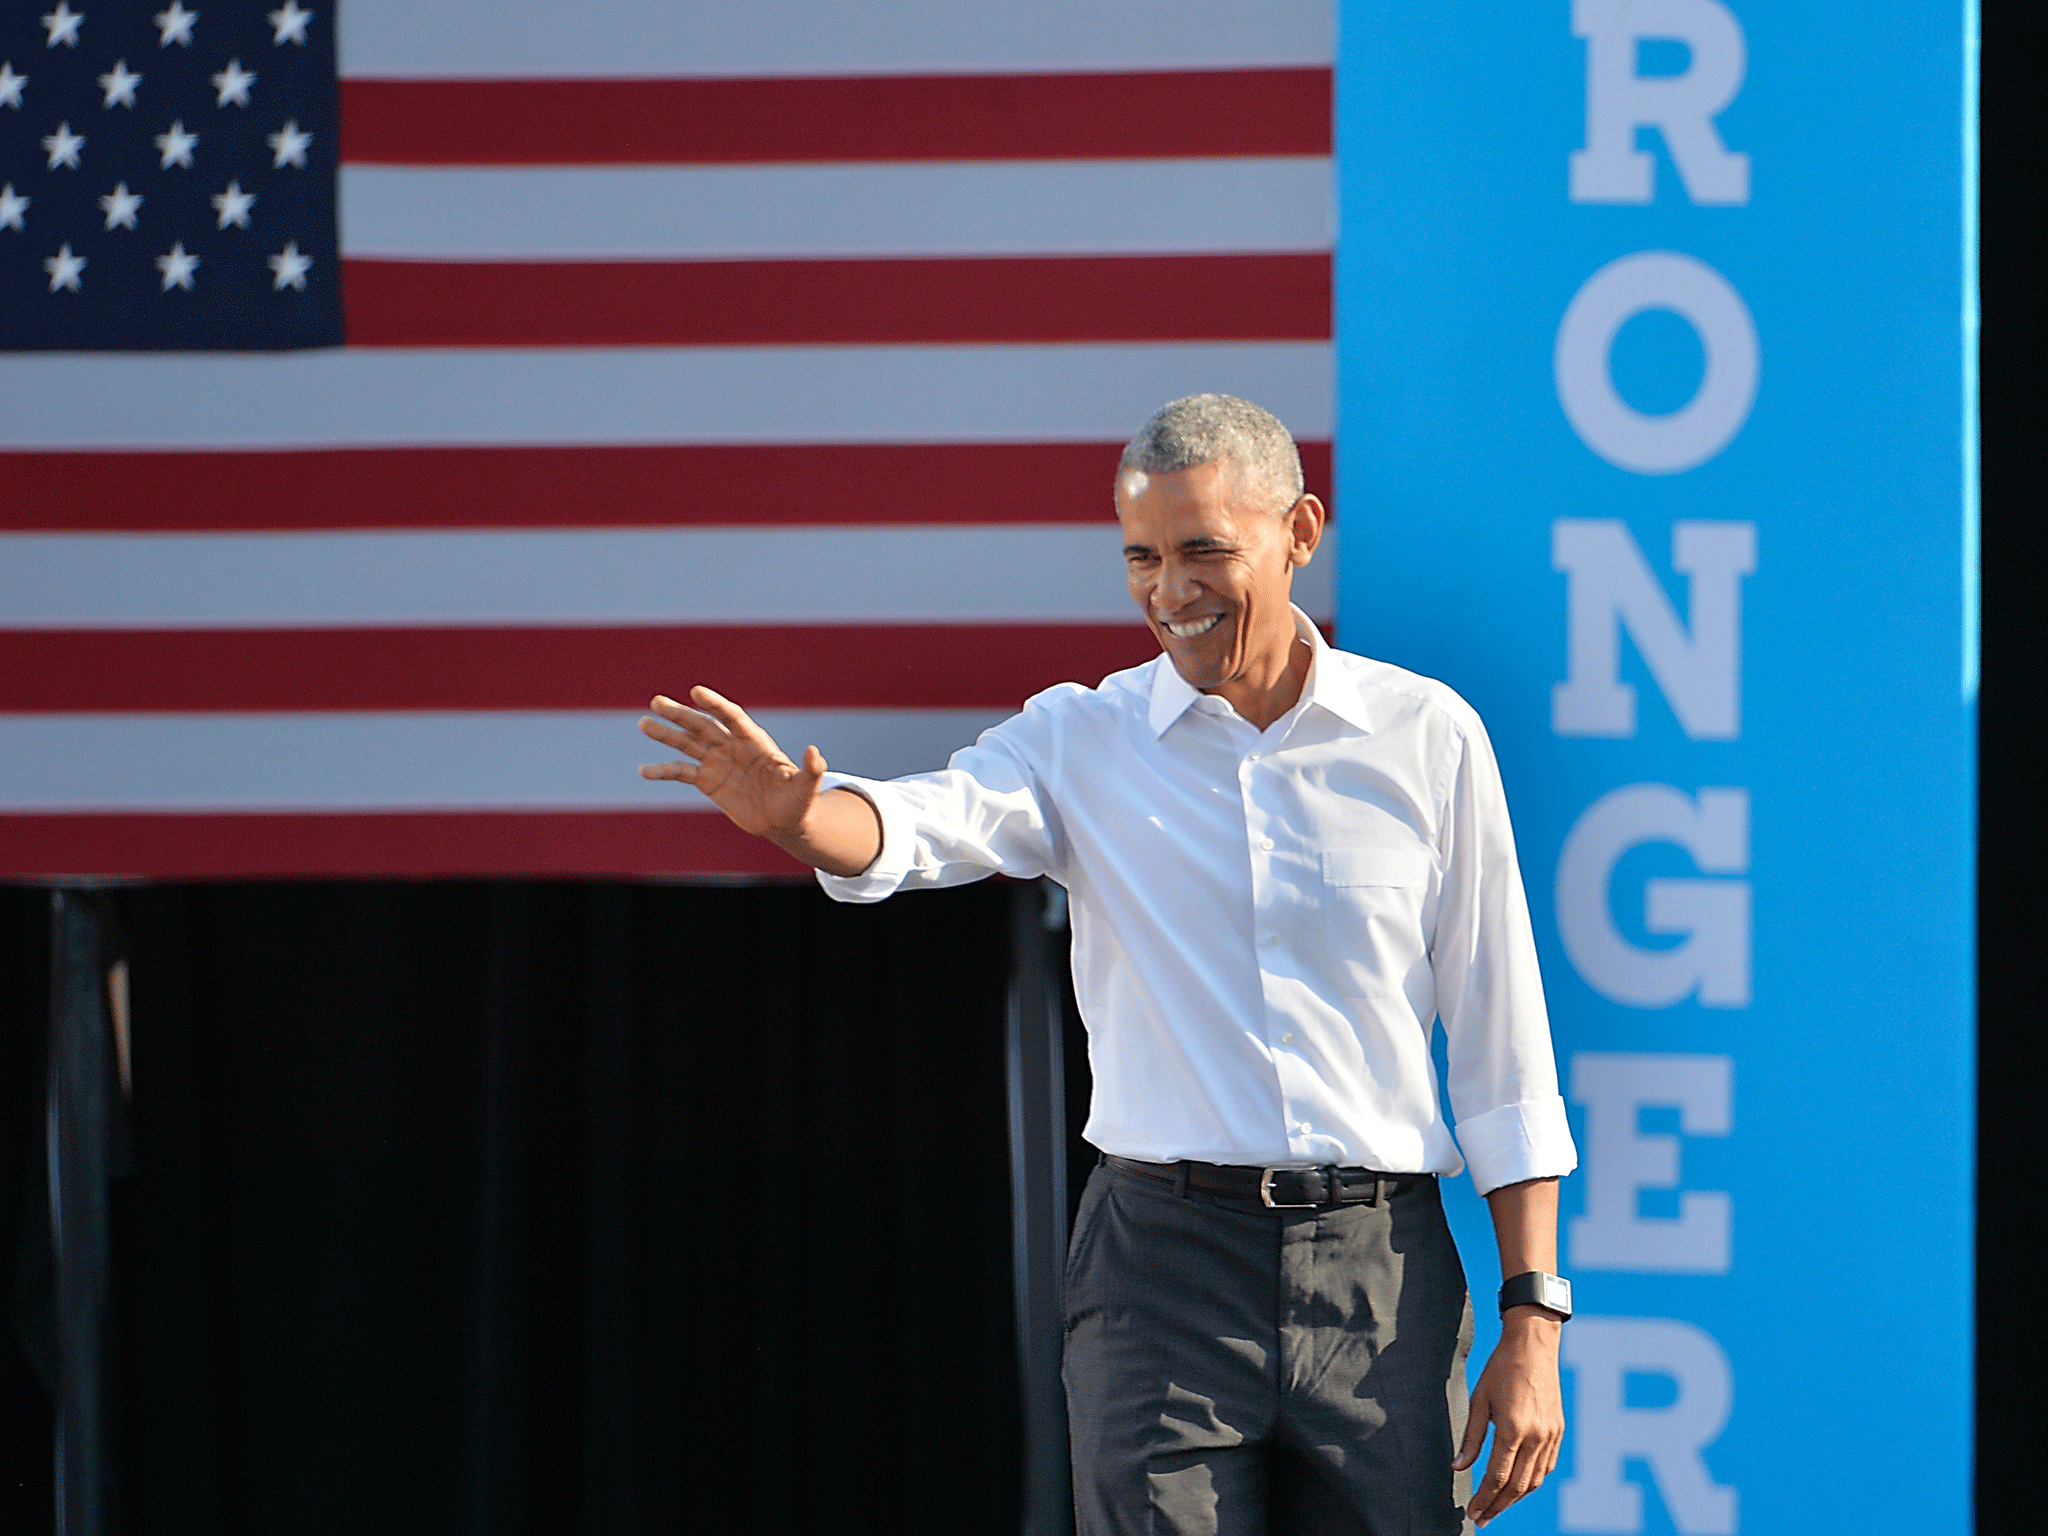 Barack Obama was appearing at a Hillary Clinton rally in North Carolina on 2 November